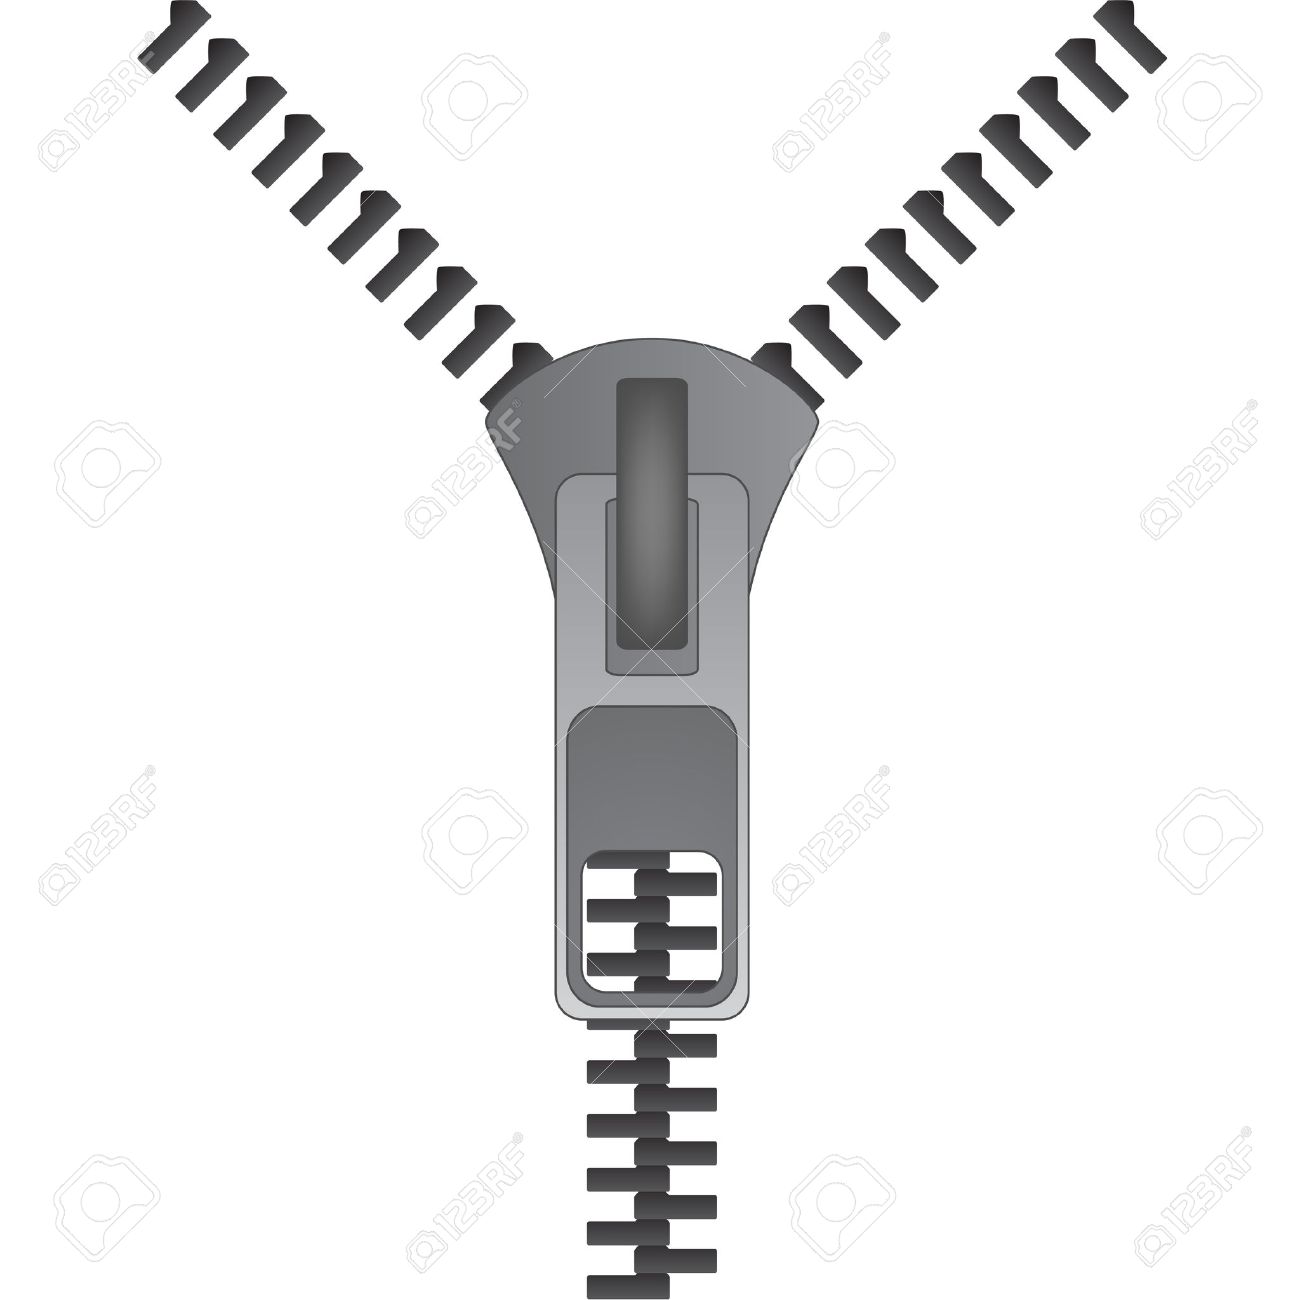 animated zipper clipart - photo #14